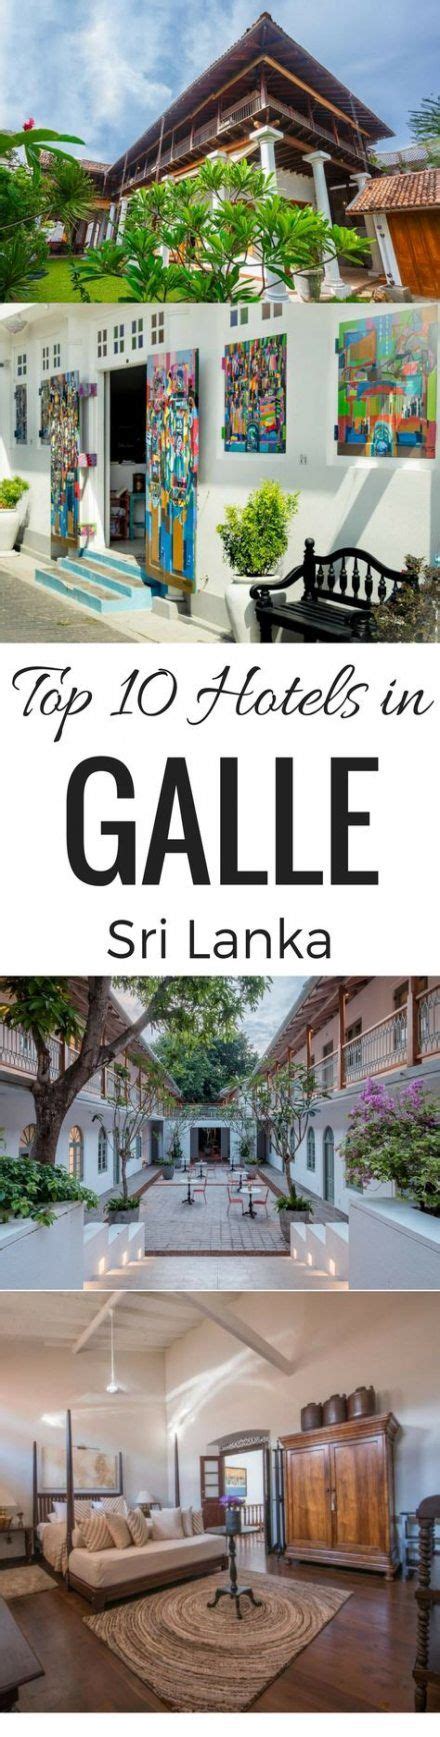 Travel Photography Asia Sri Lanka 31+ Ideas | Sri lanka travel, Asia travel, Travel inspiration ...